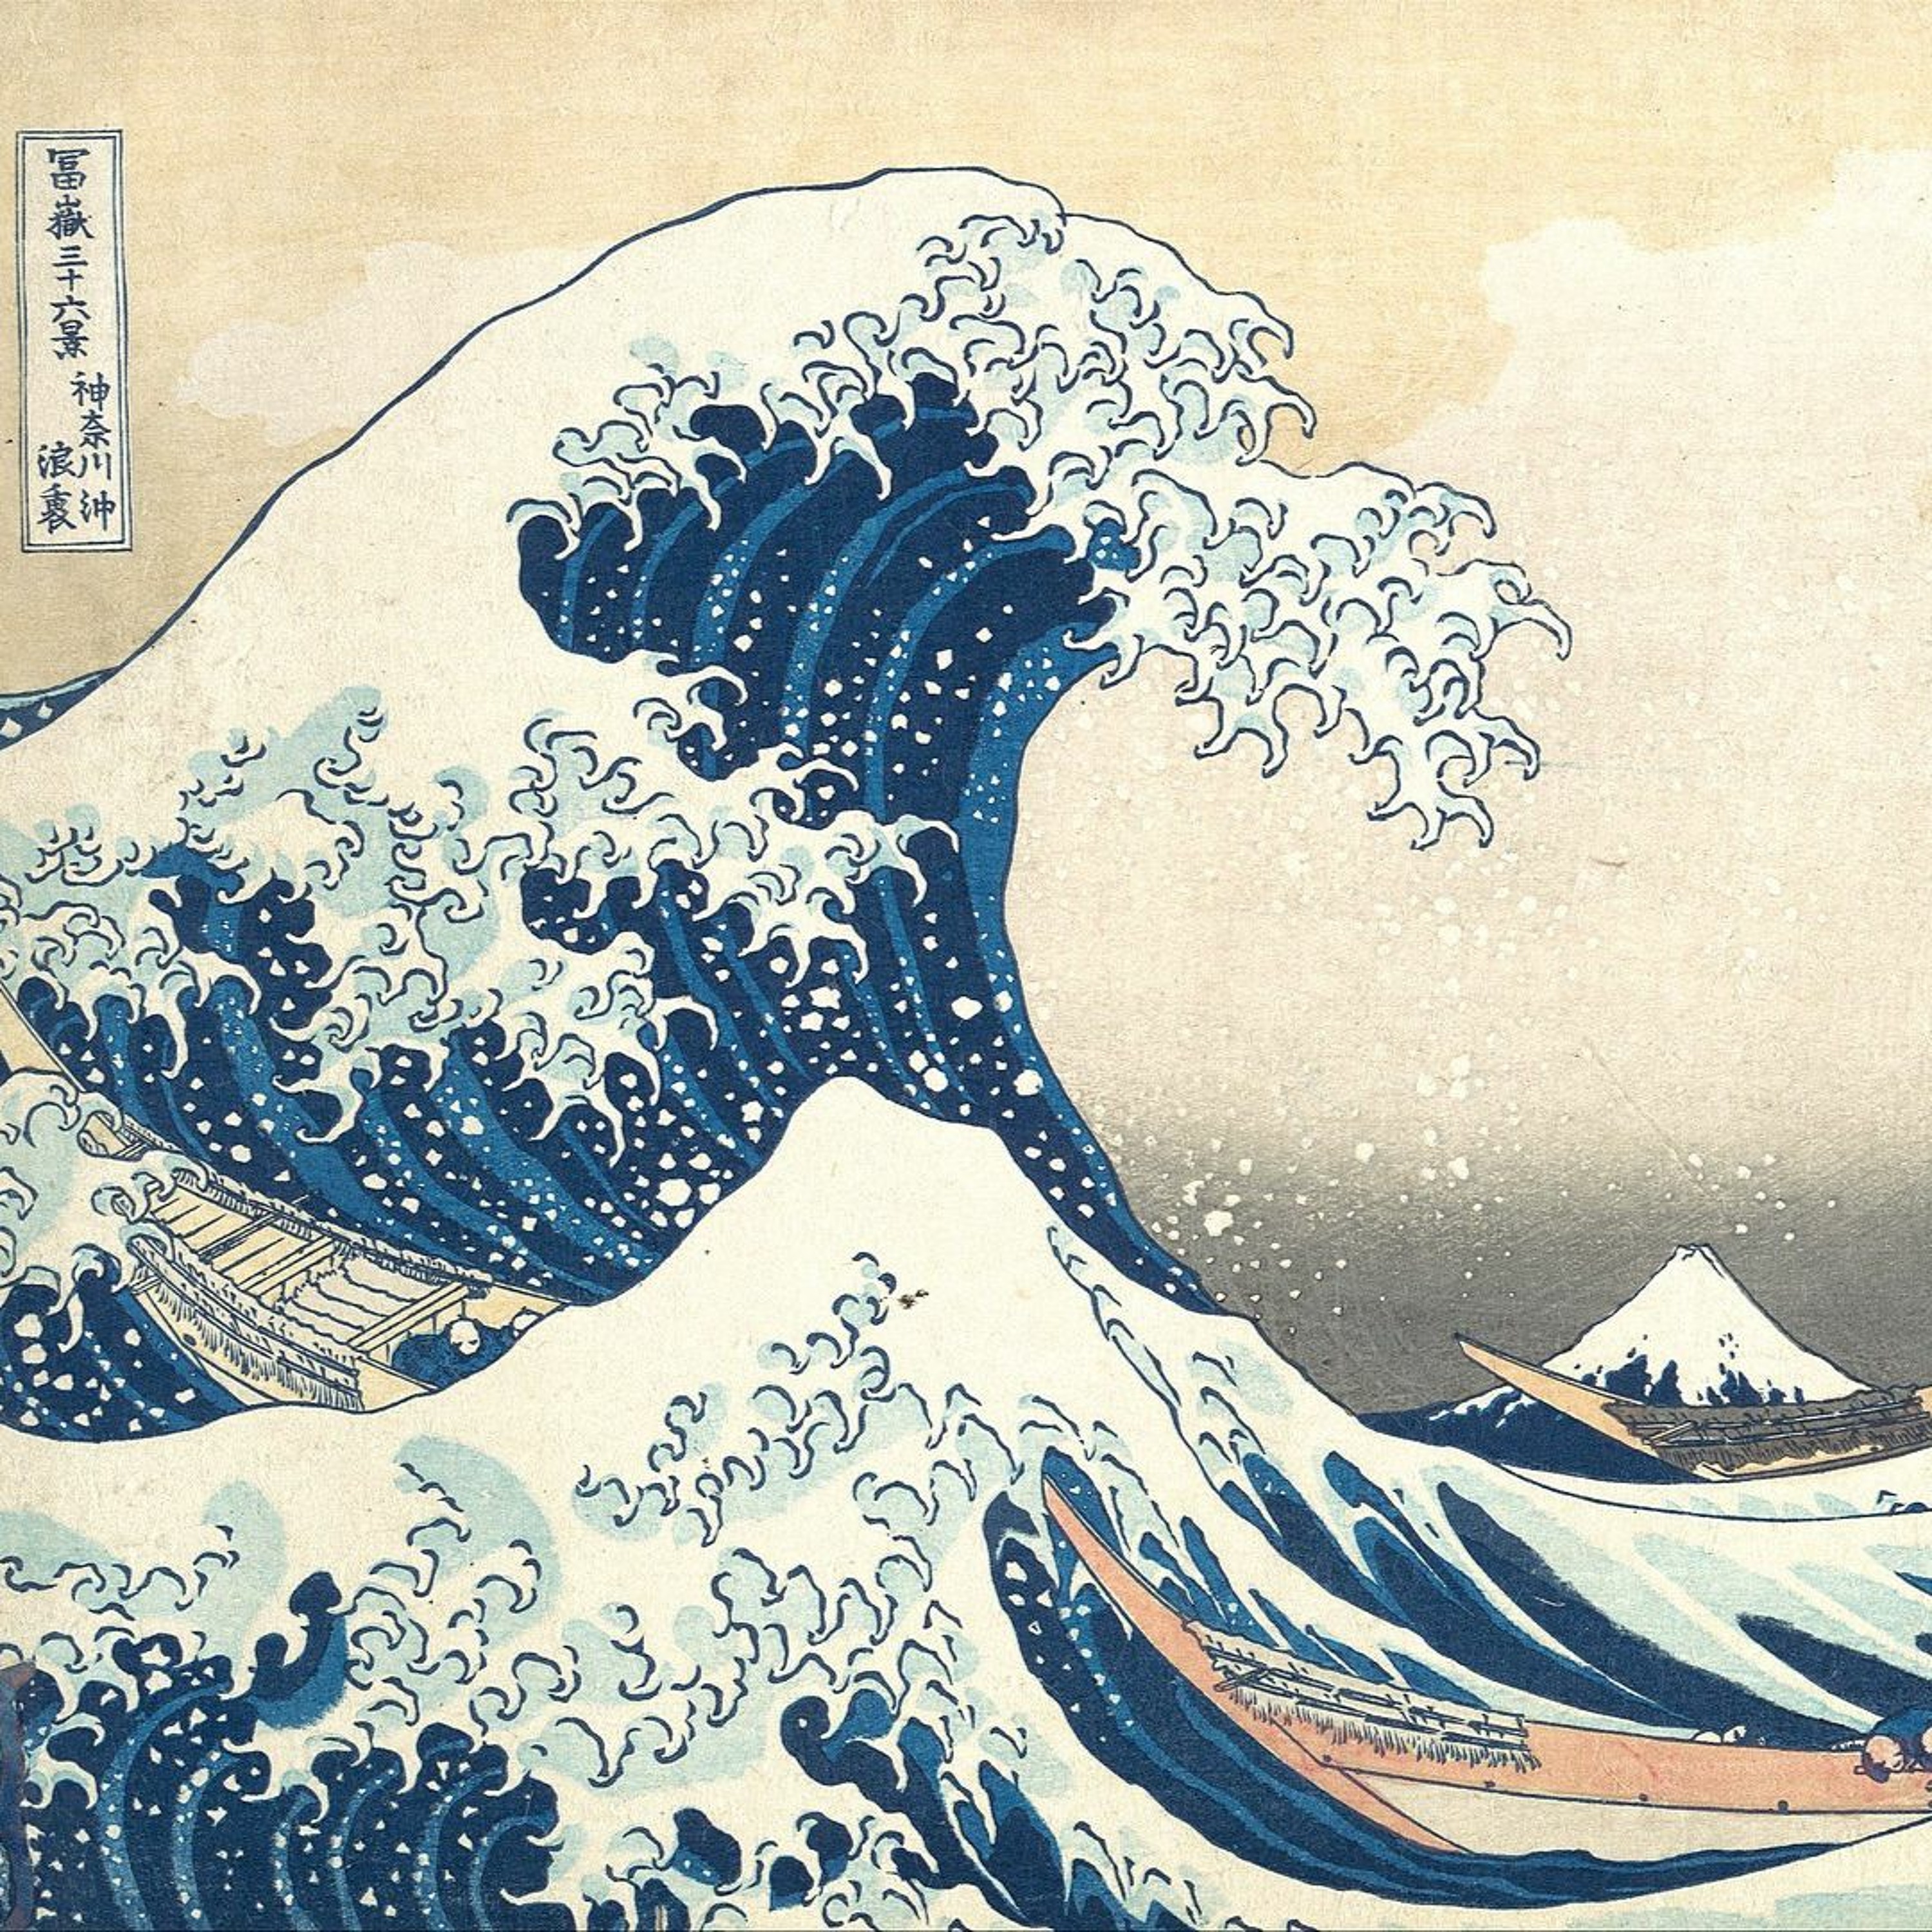 Ep. 42 - Katsushika Hokusai's 